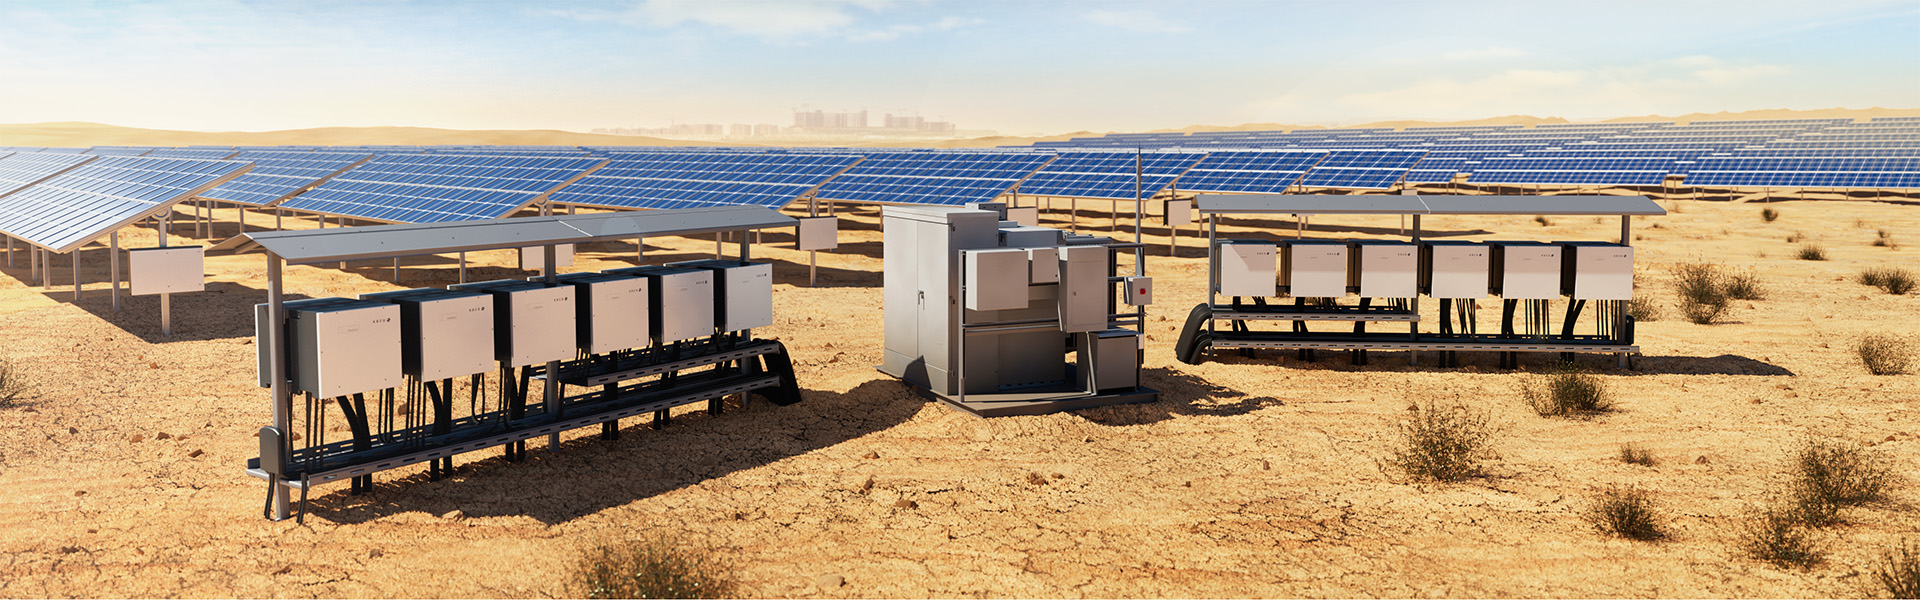 blueplanet web public - Monitoreo efectivo de sistemas solares fotovoltaicos